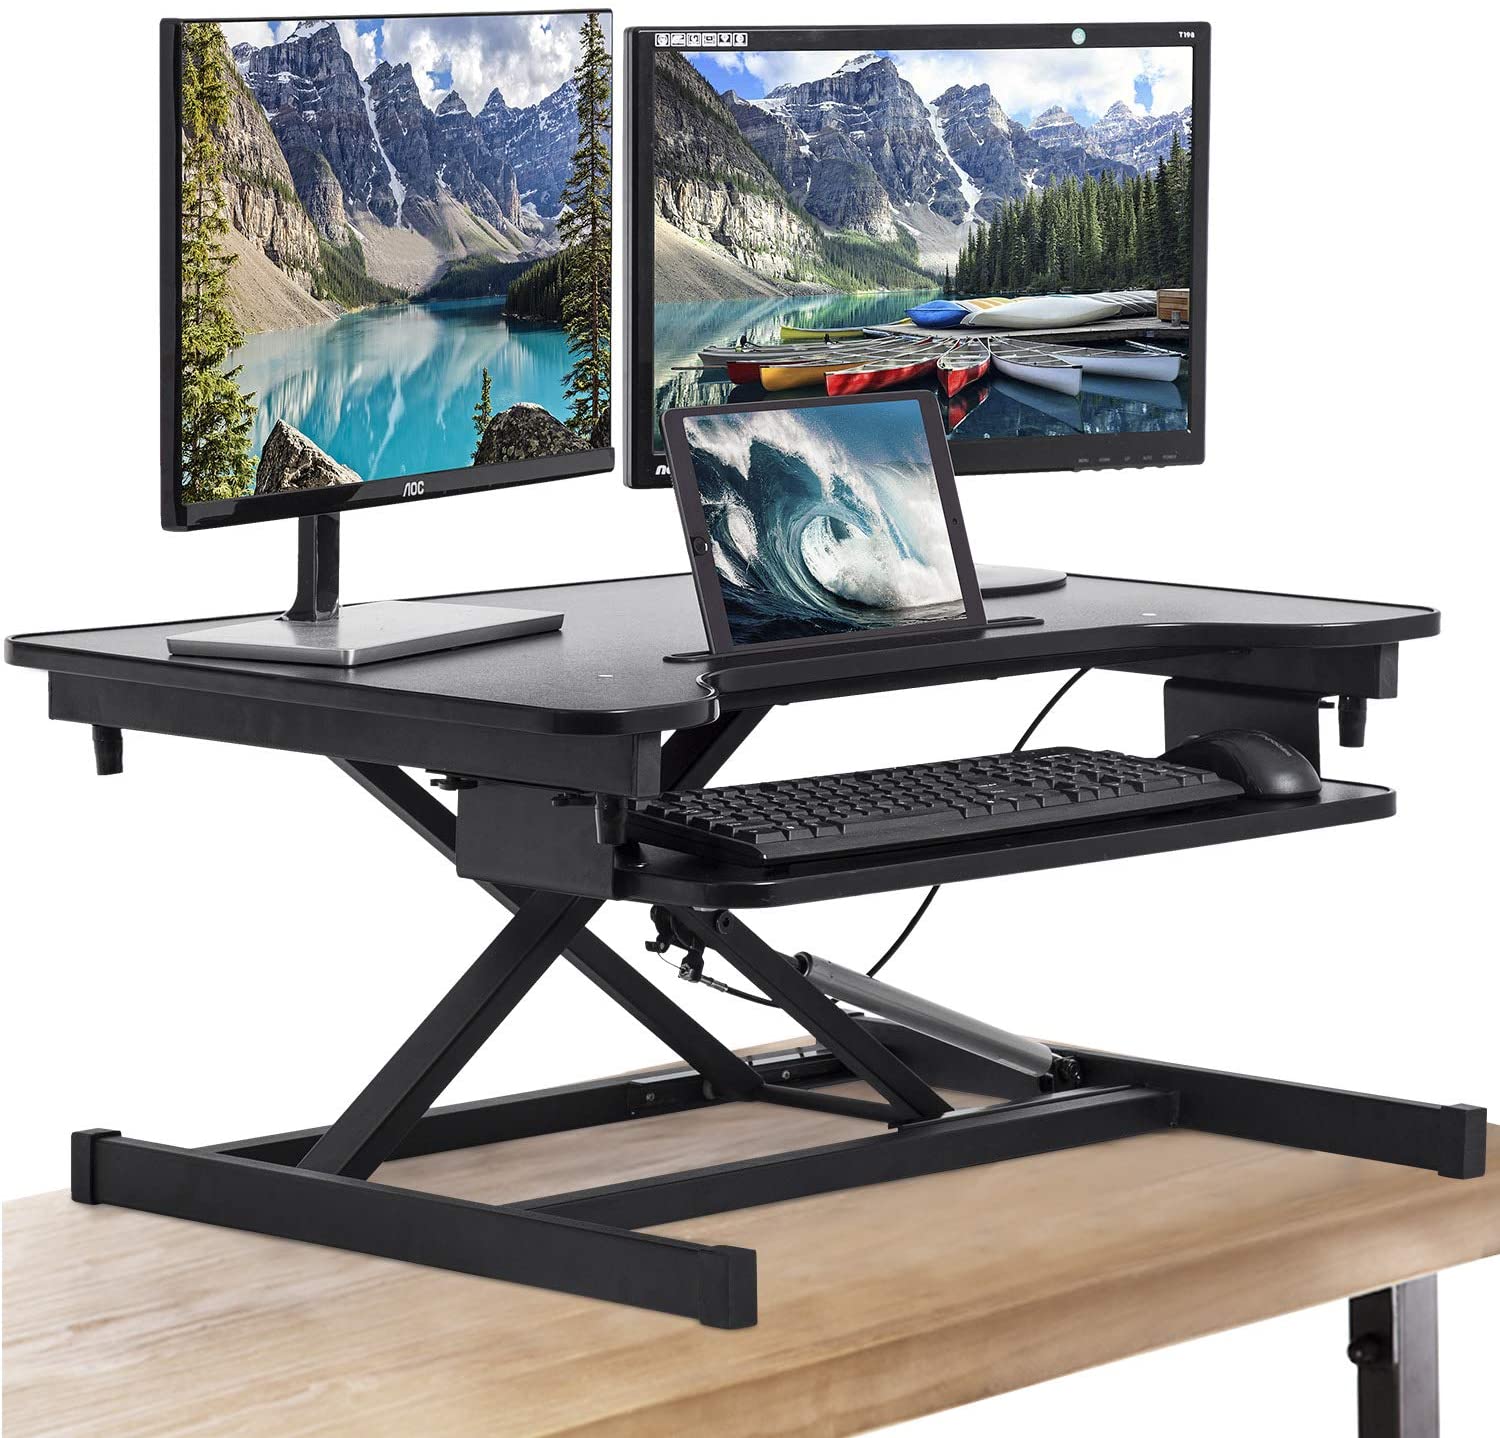 FDW Adjustable Height 32 Inches Steel Standing Desk Coverter Stand Up Desk Home Office Computer Desk Workstation,Black